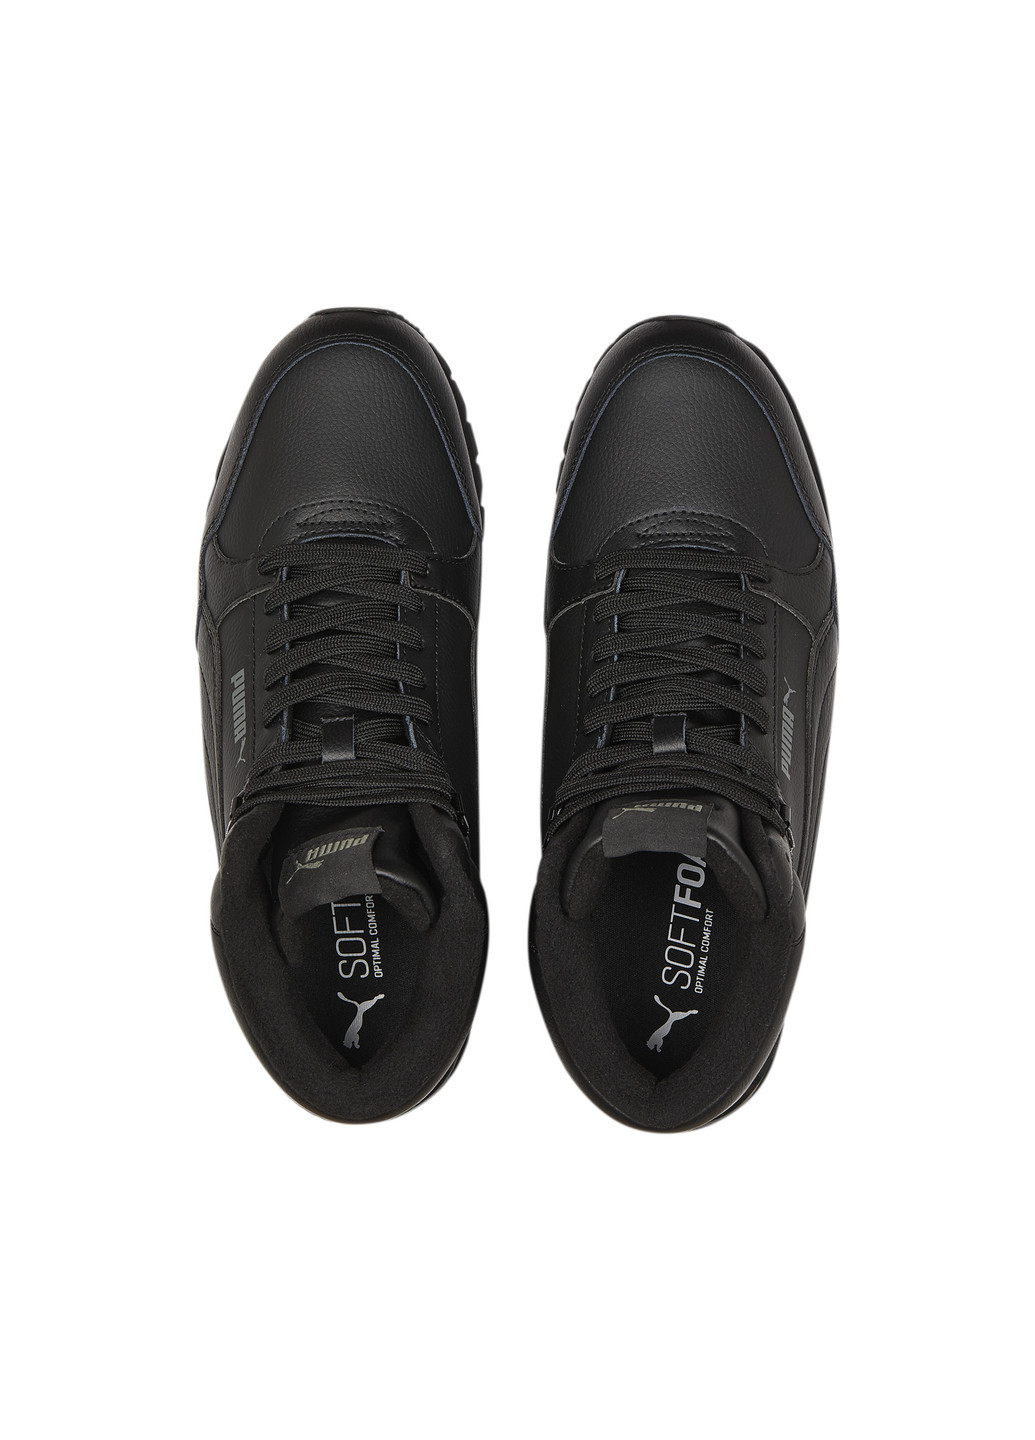 Черные кроссовки st runner v3 mid l sneakers Puma